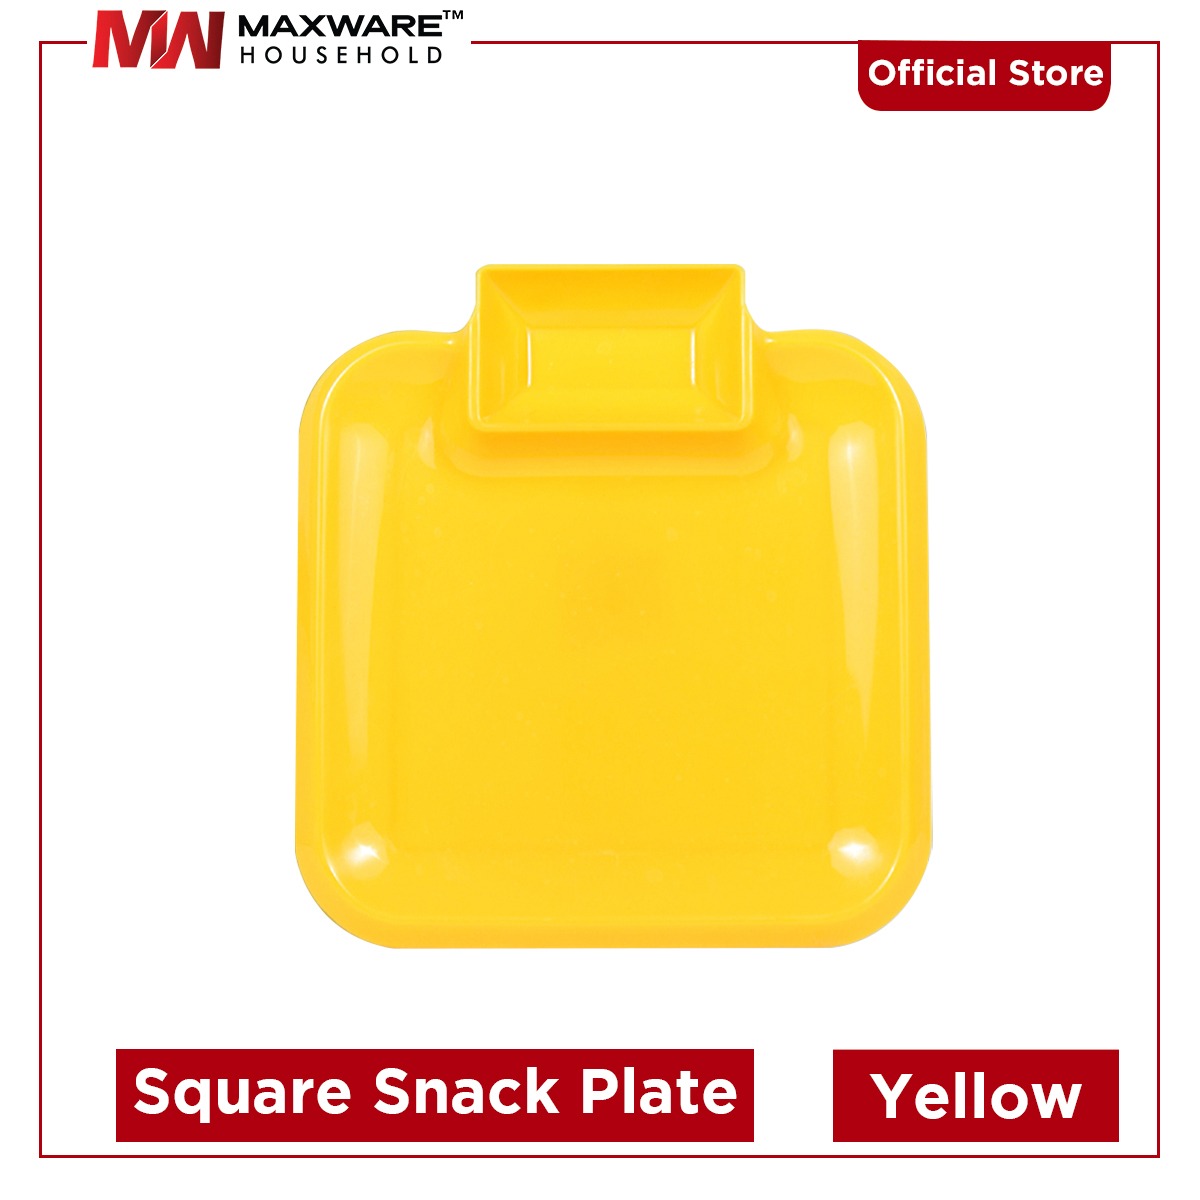 Square Snack Plate